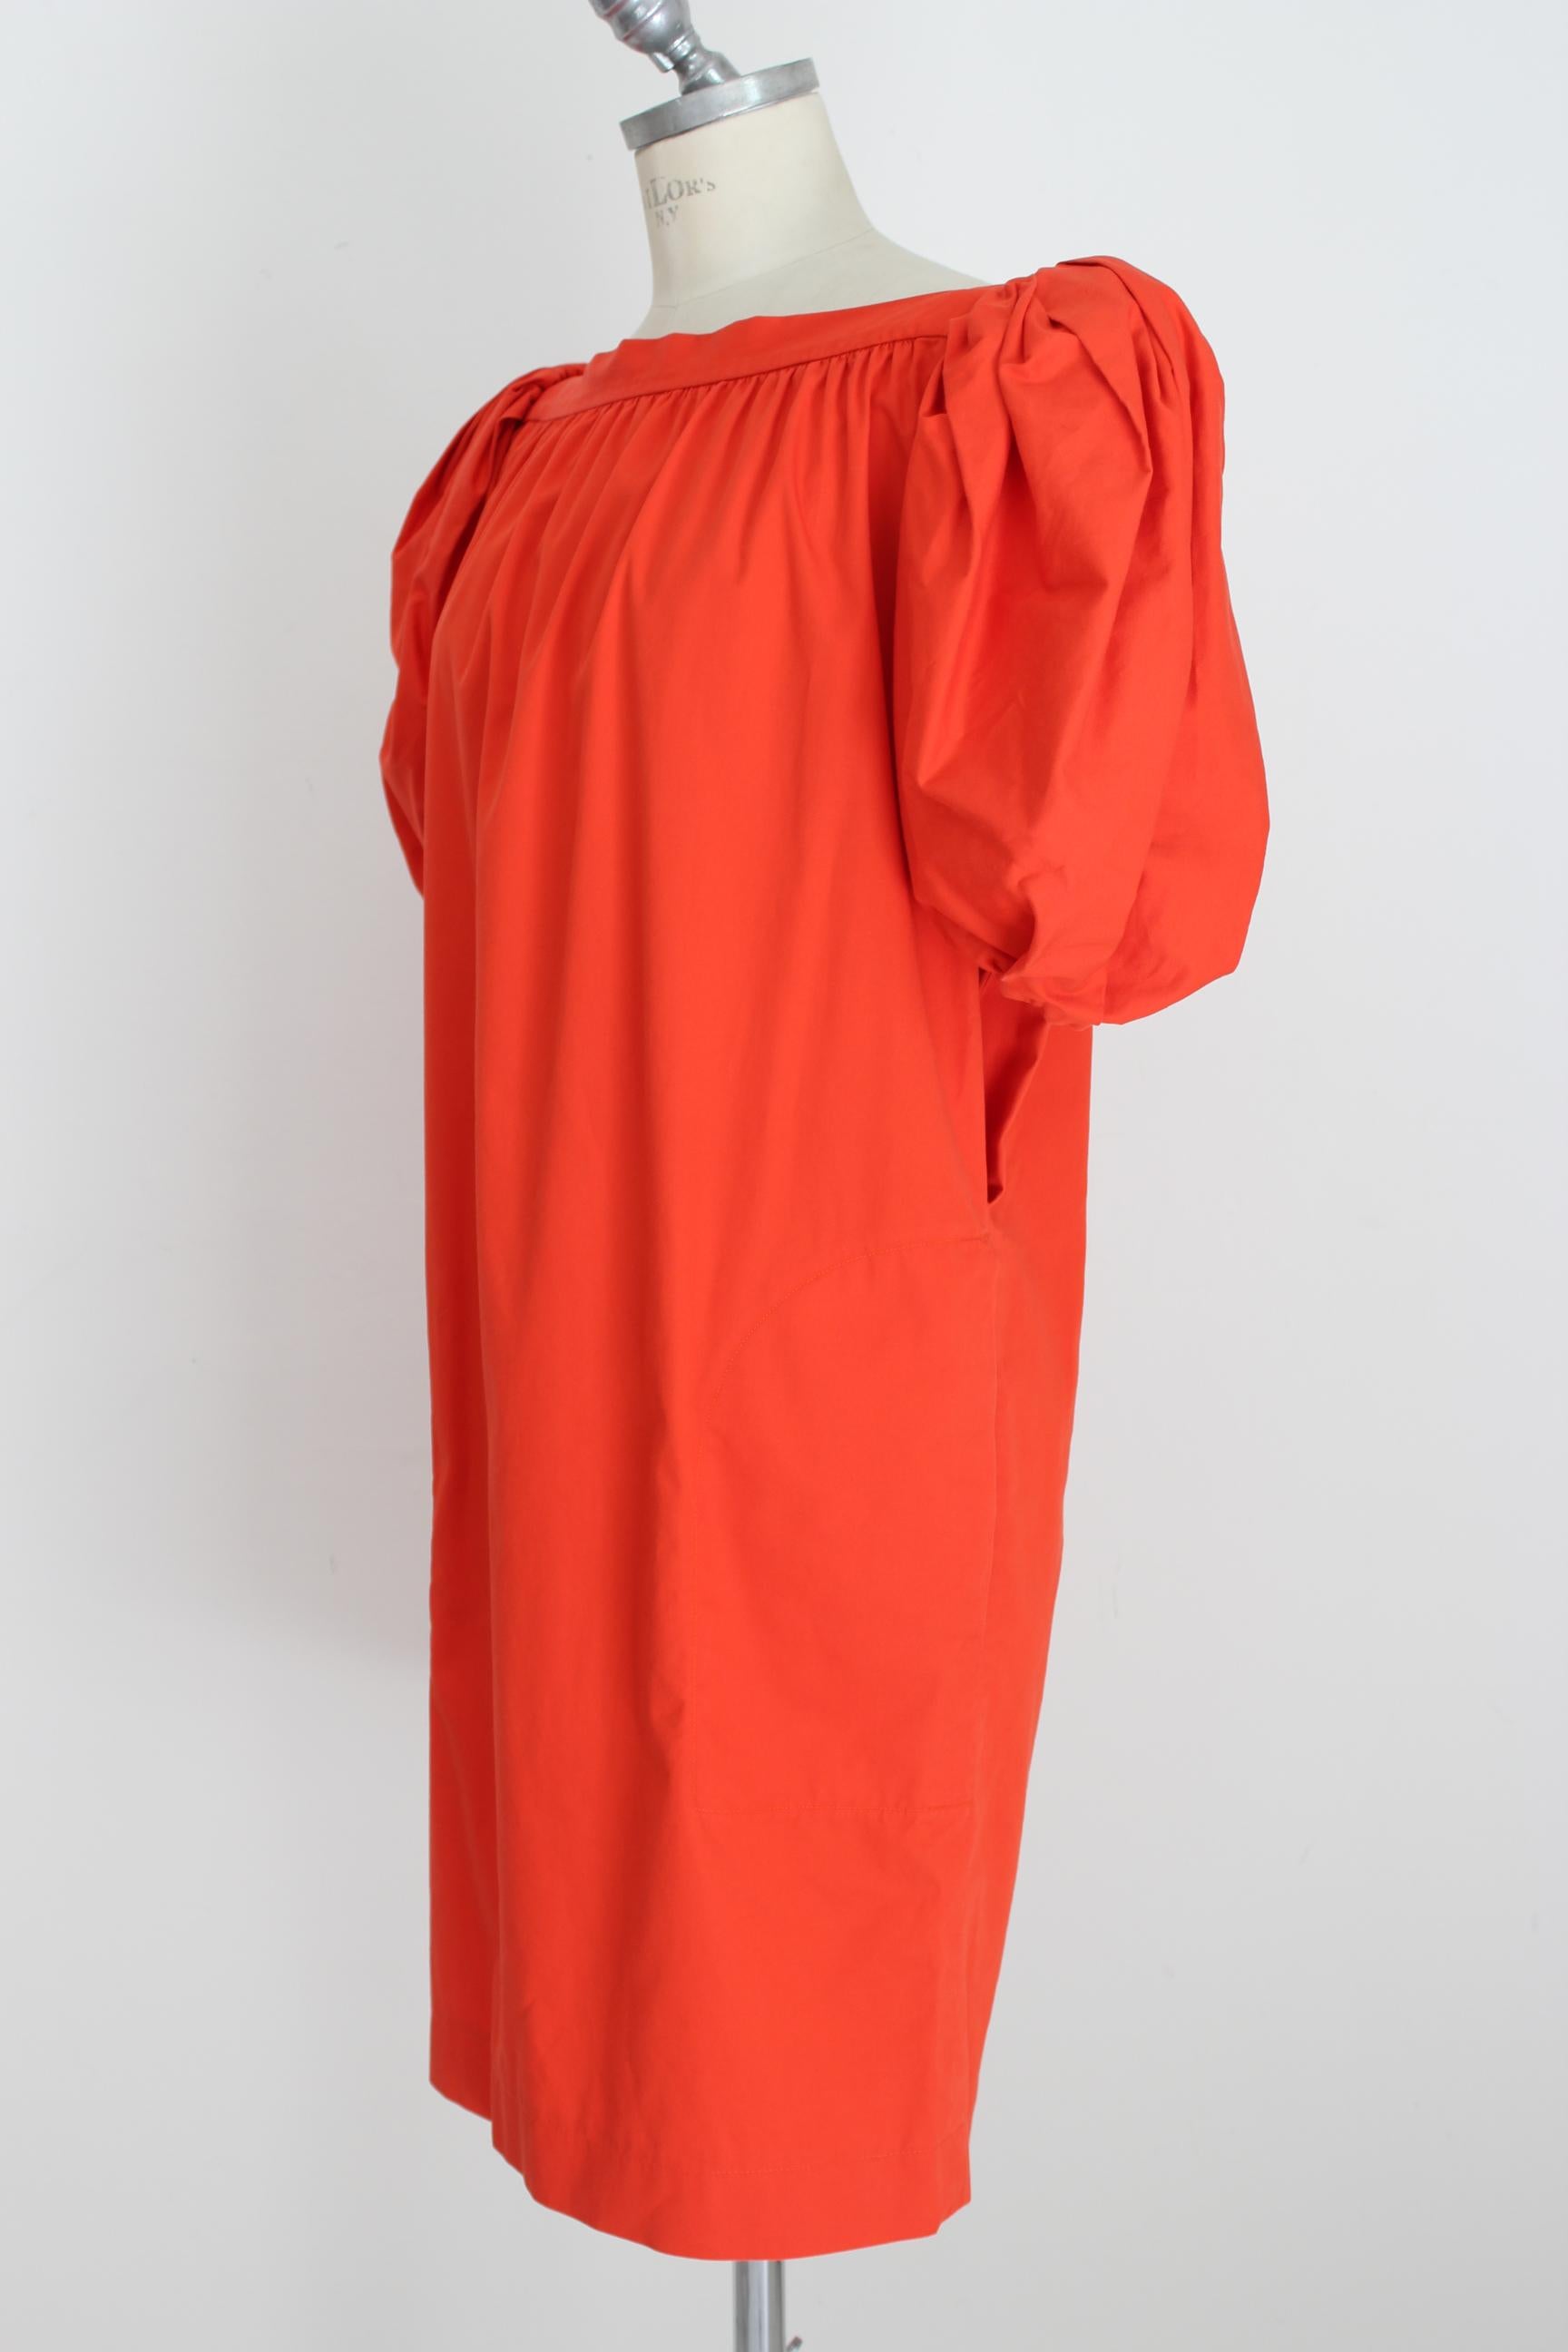 Yves Saint Laurent Rive Gauche Red Cotton Straight Cocktail Dress 1980s 1